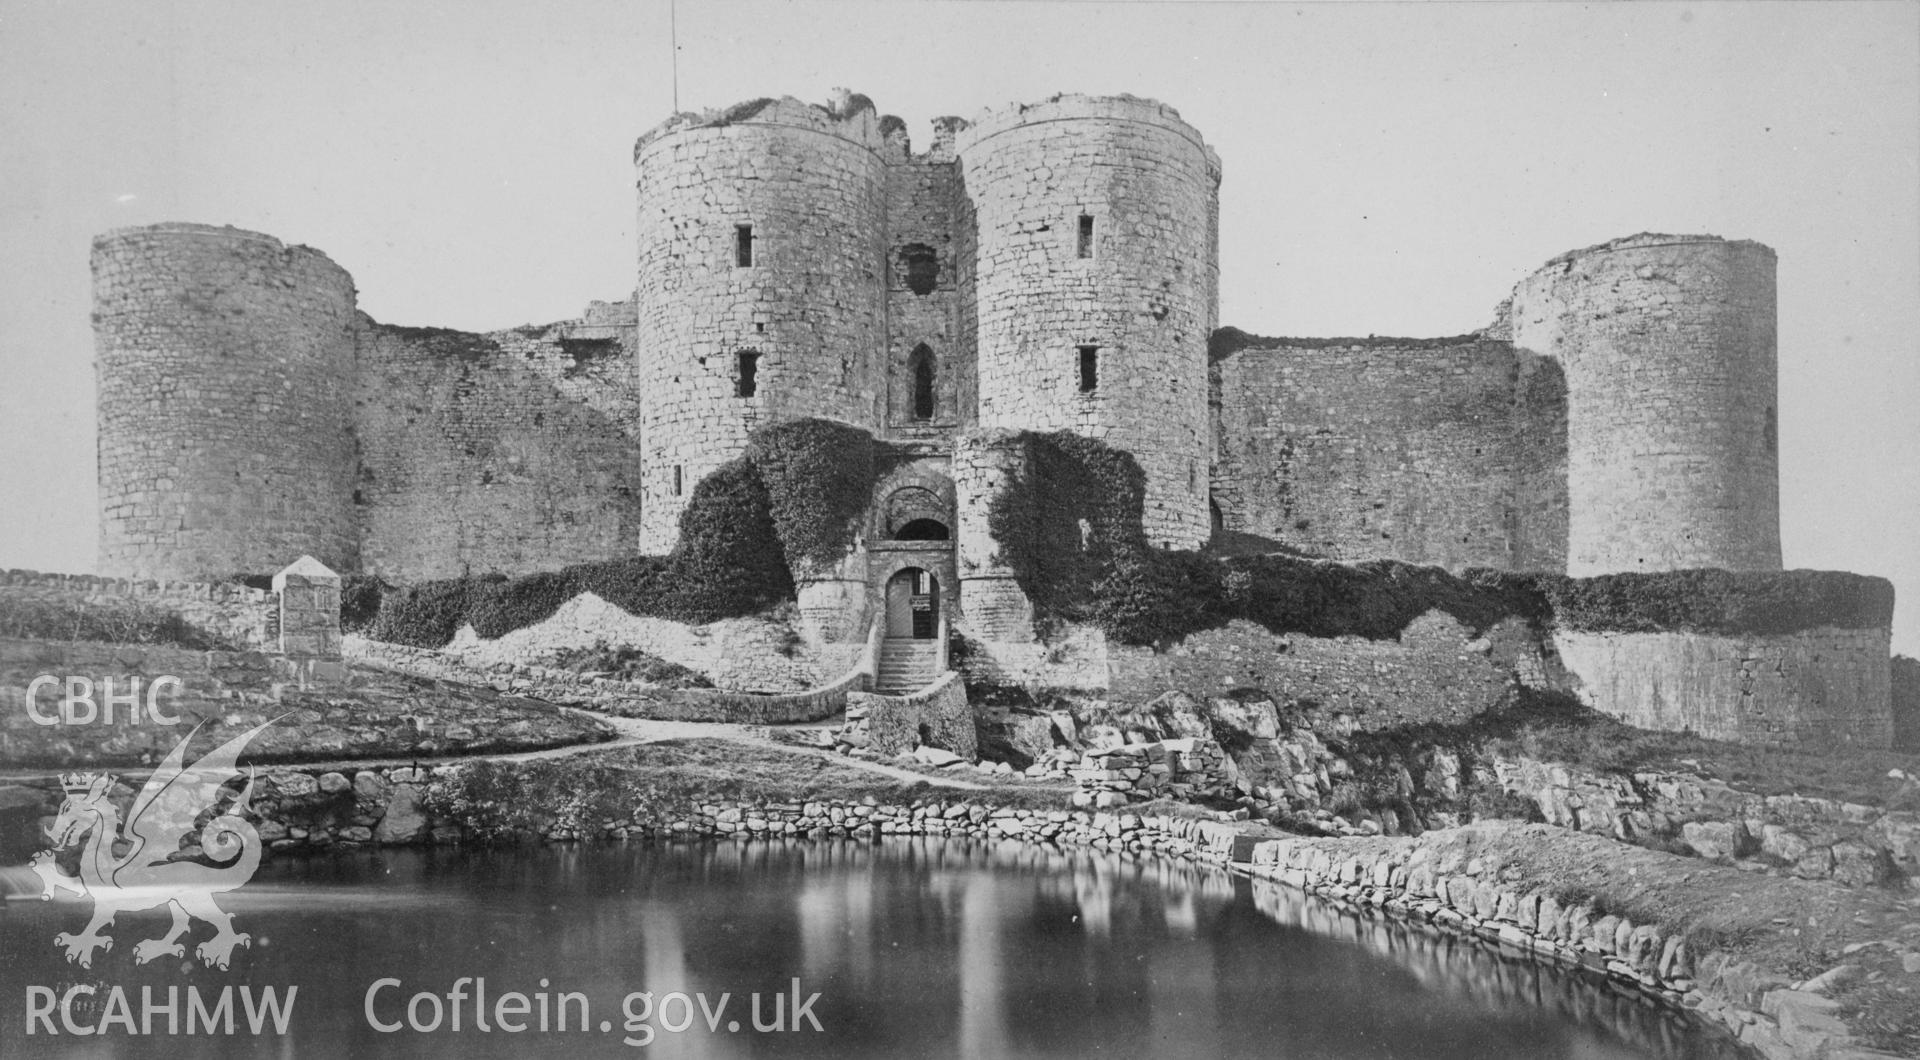 Digital copy of an acetate negative showing Harlech Castle.